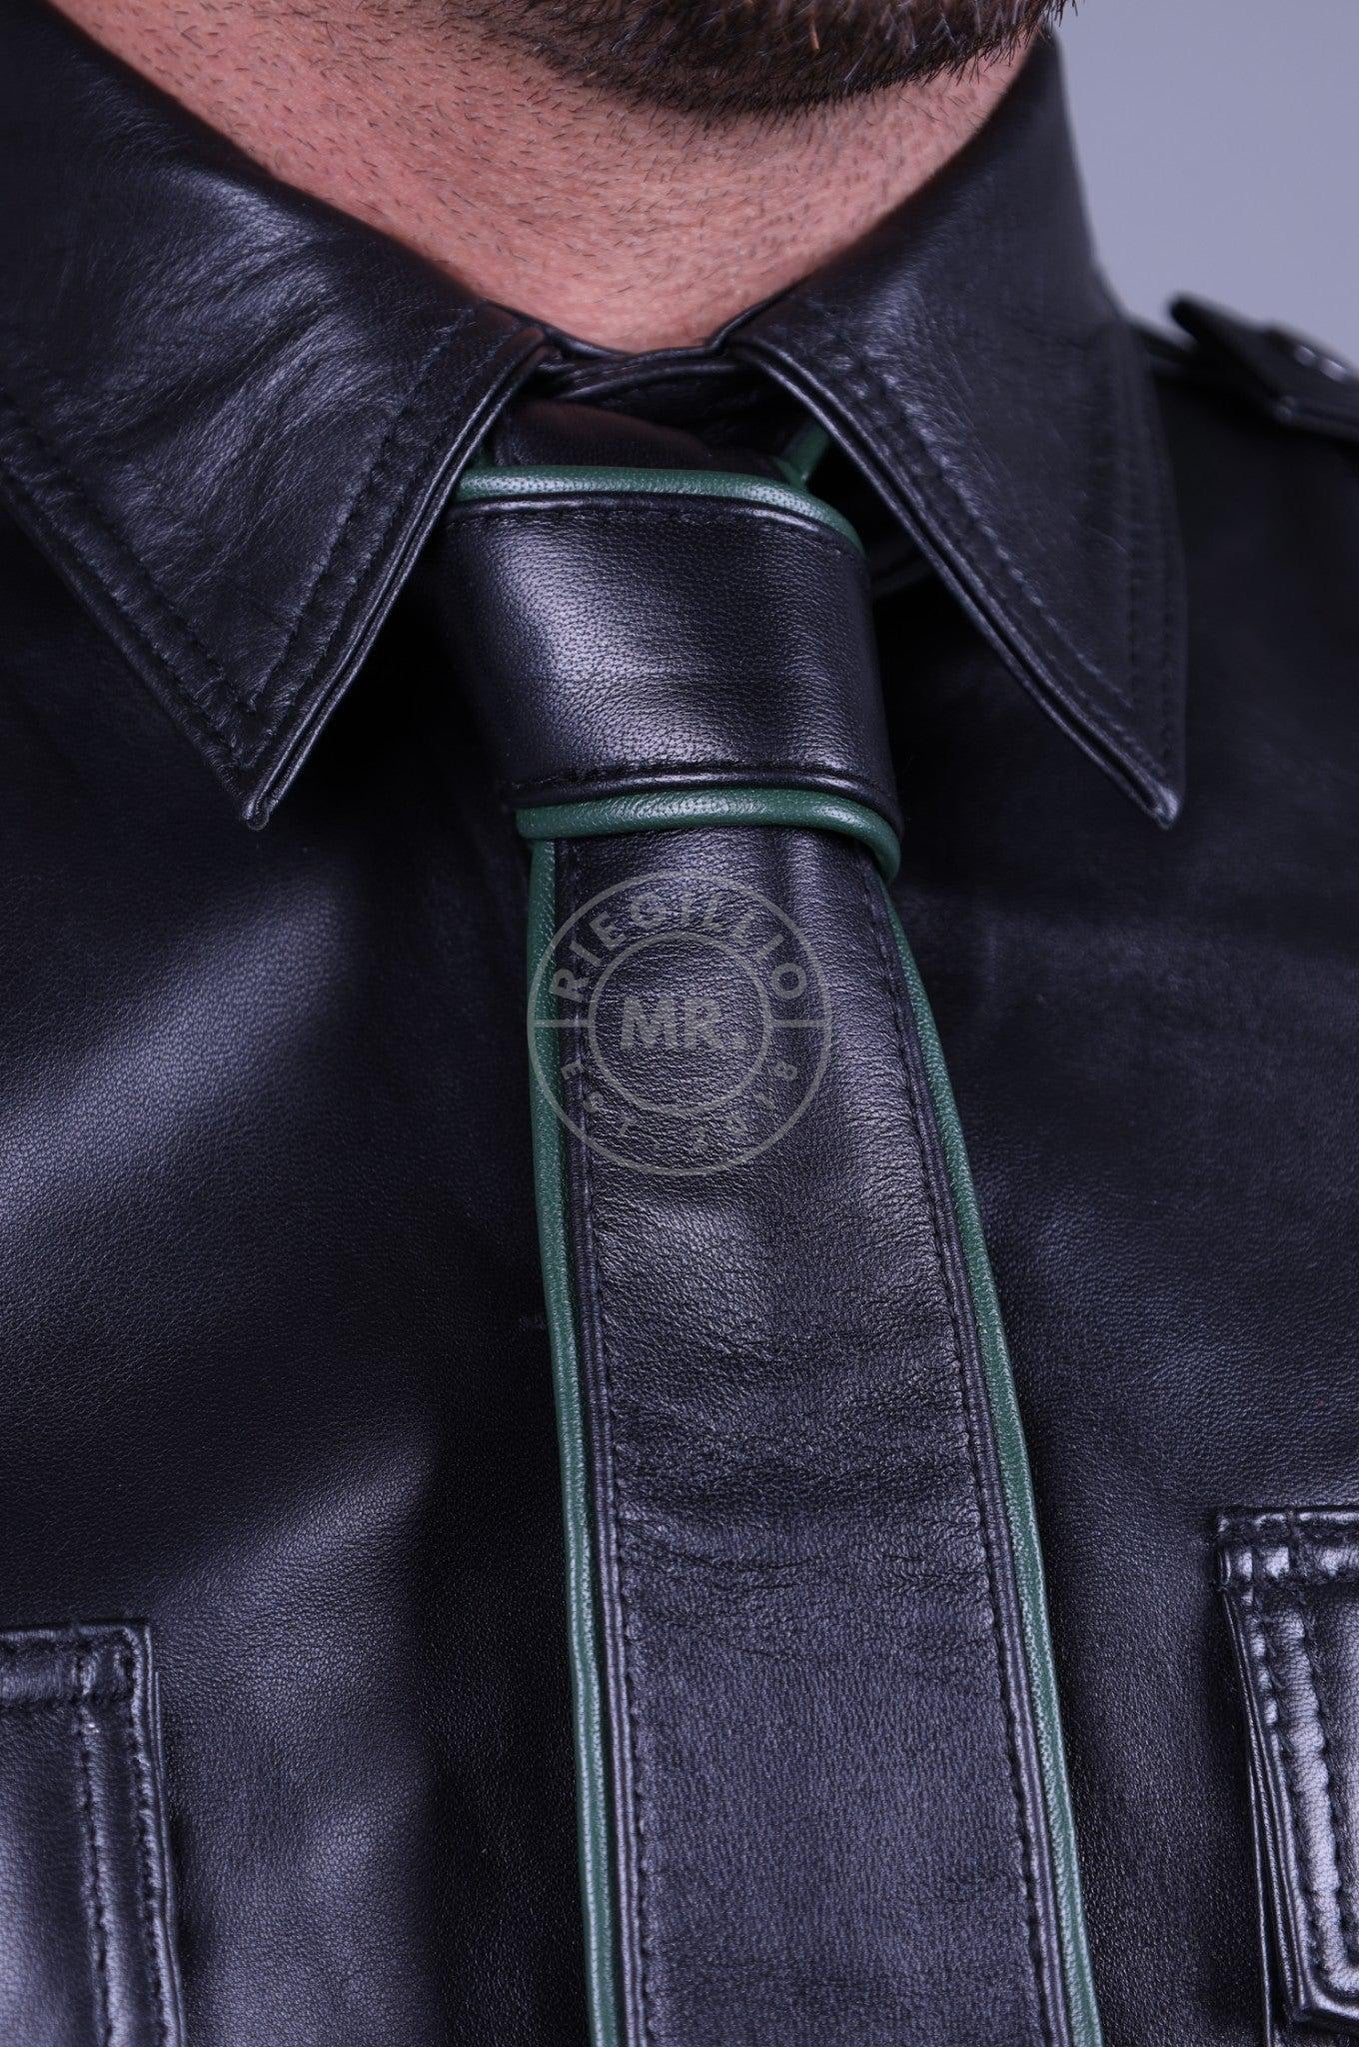 Black Leather Tie - DARK GREEN Piping-at MR. Riegillio